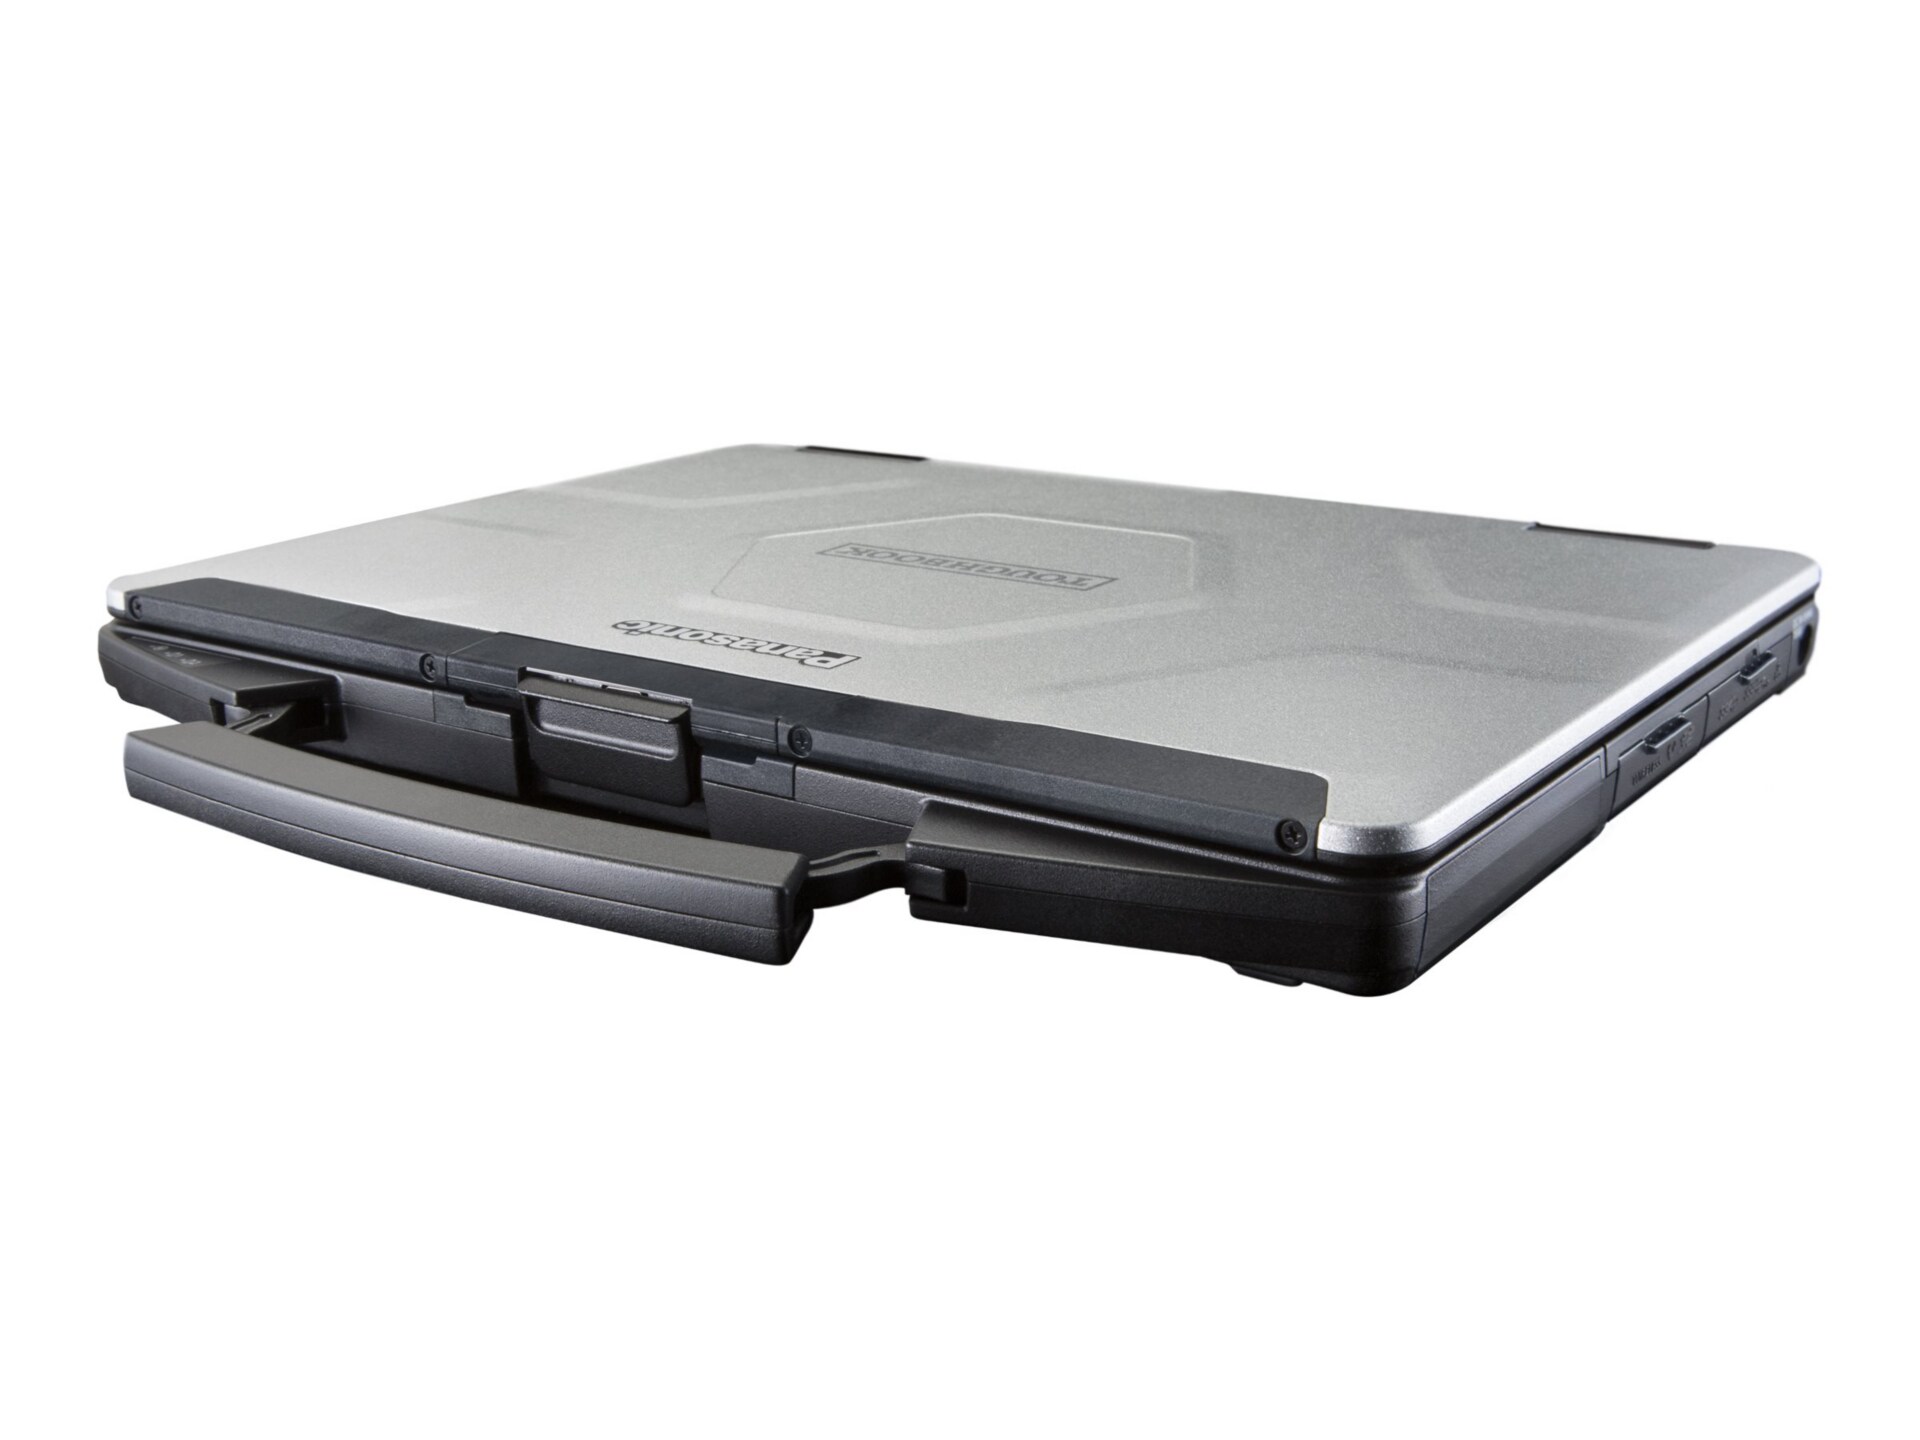 Panasonic Toughbook 54 - 14" - Core i5 6300U - 8 GB RAM - 500 GB HDD